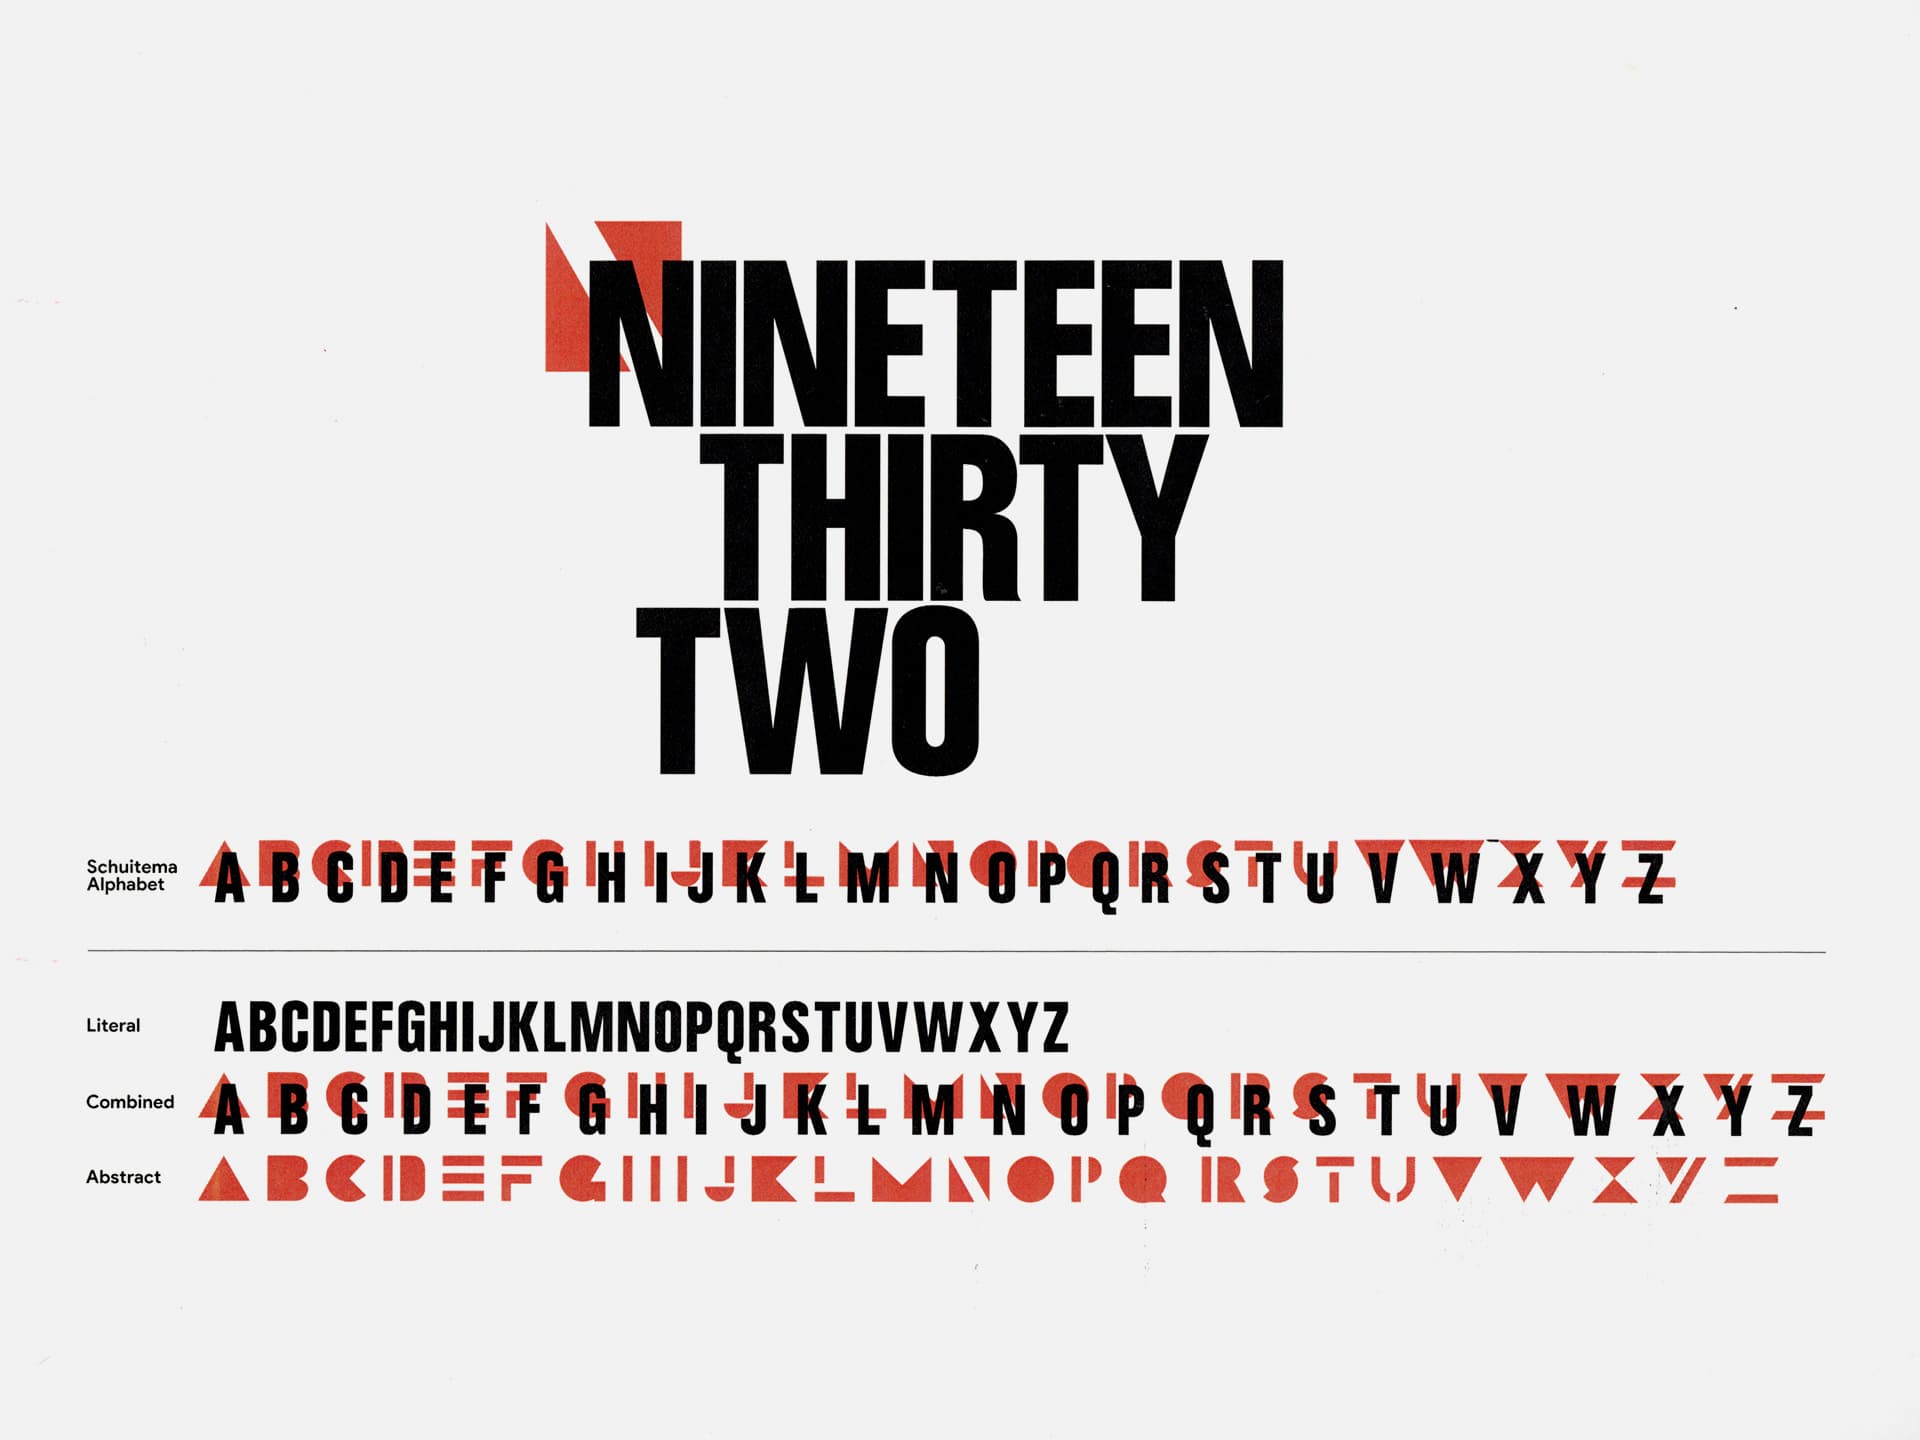 Digital revival of an alphabet designed by Schuitema